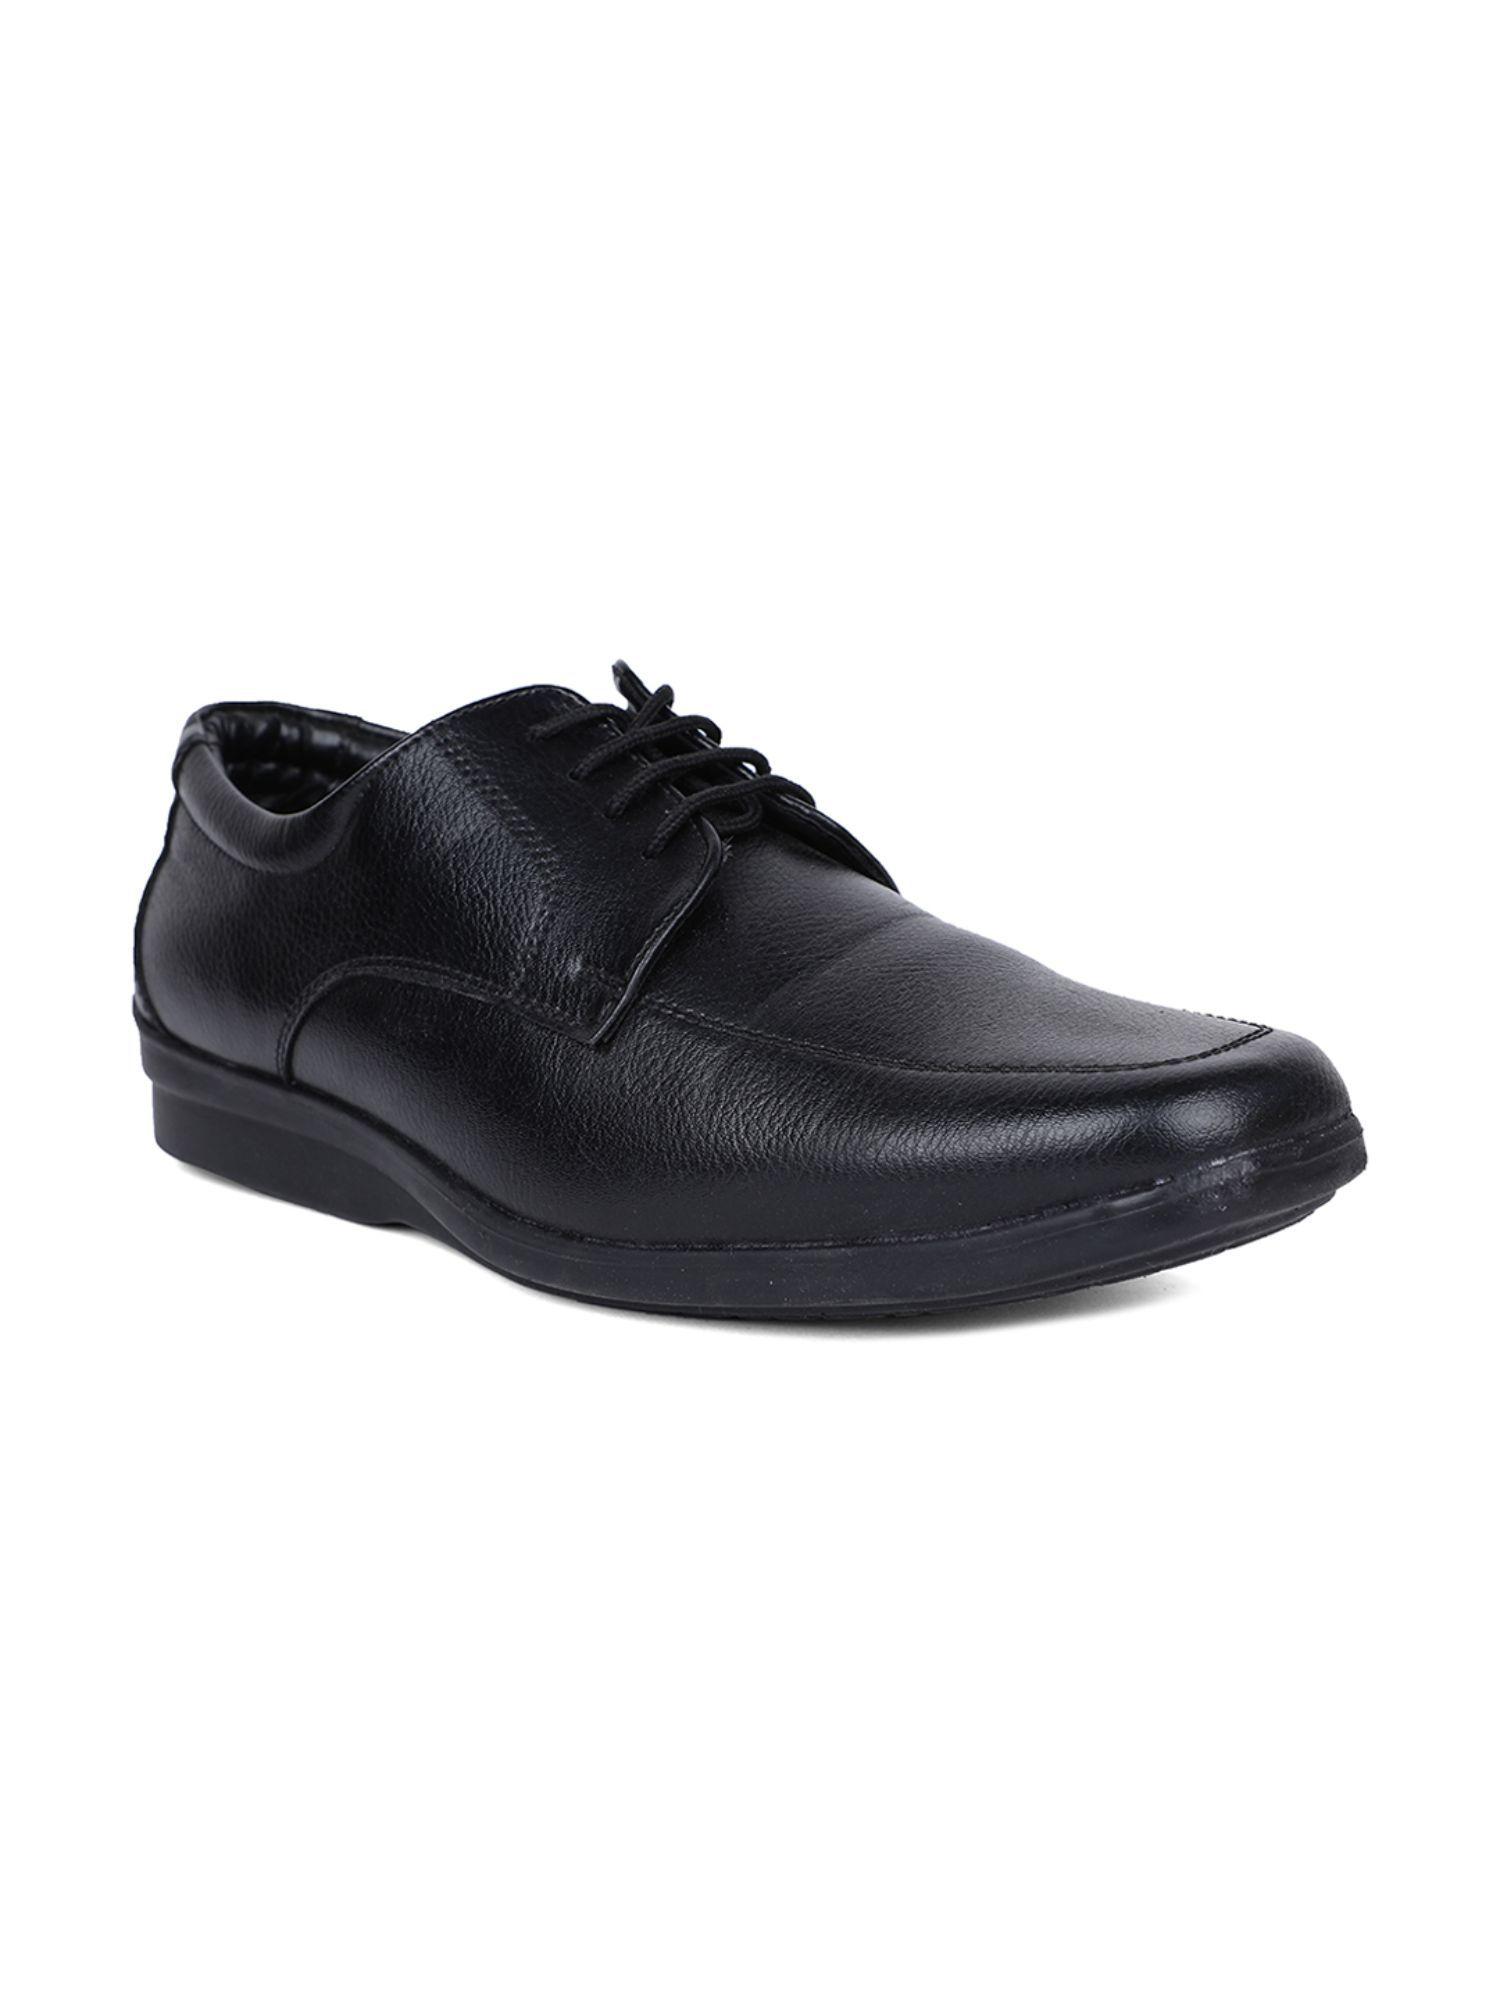 solid black formal shoes